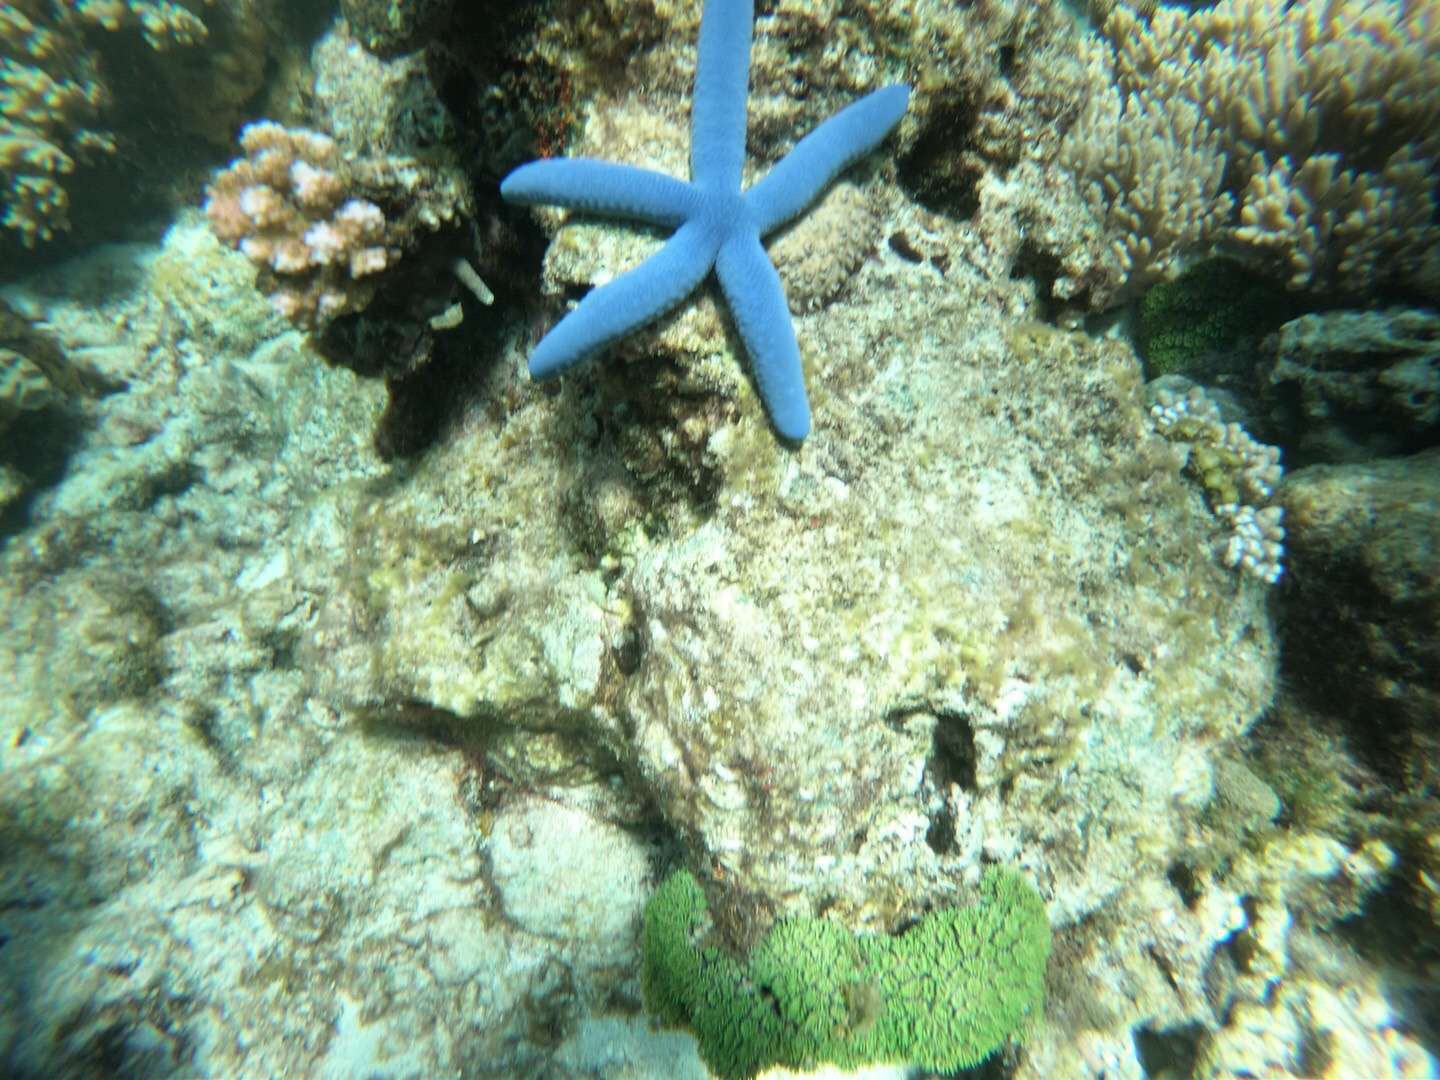 Apo island 真的是杜马盖地最美的岛屿，天然的海底世界美到不真实 很多海洋生物都看到了 真的